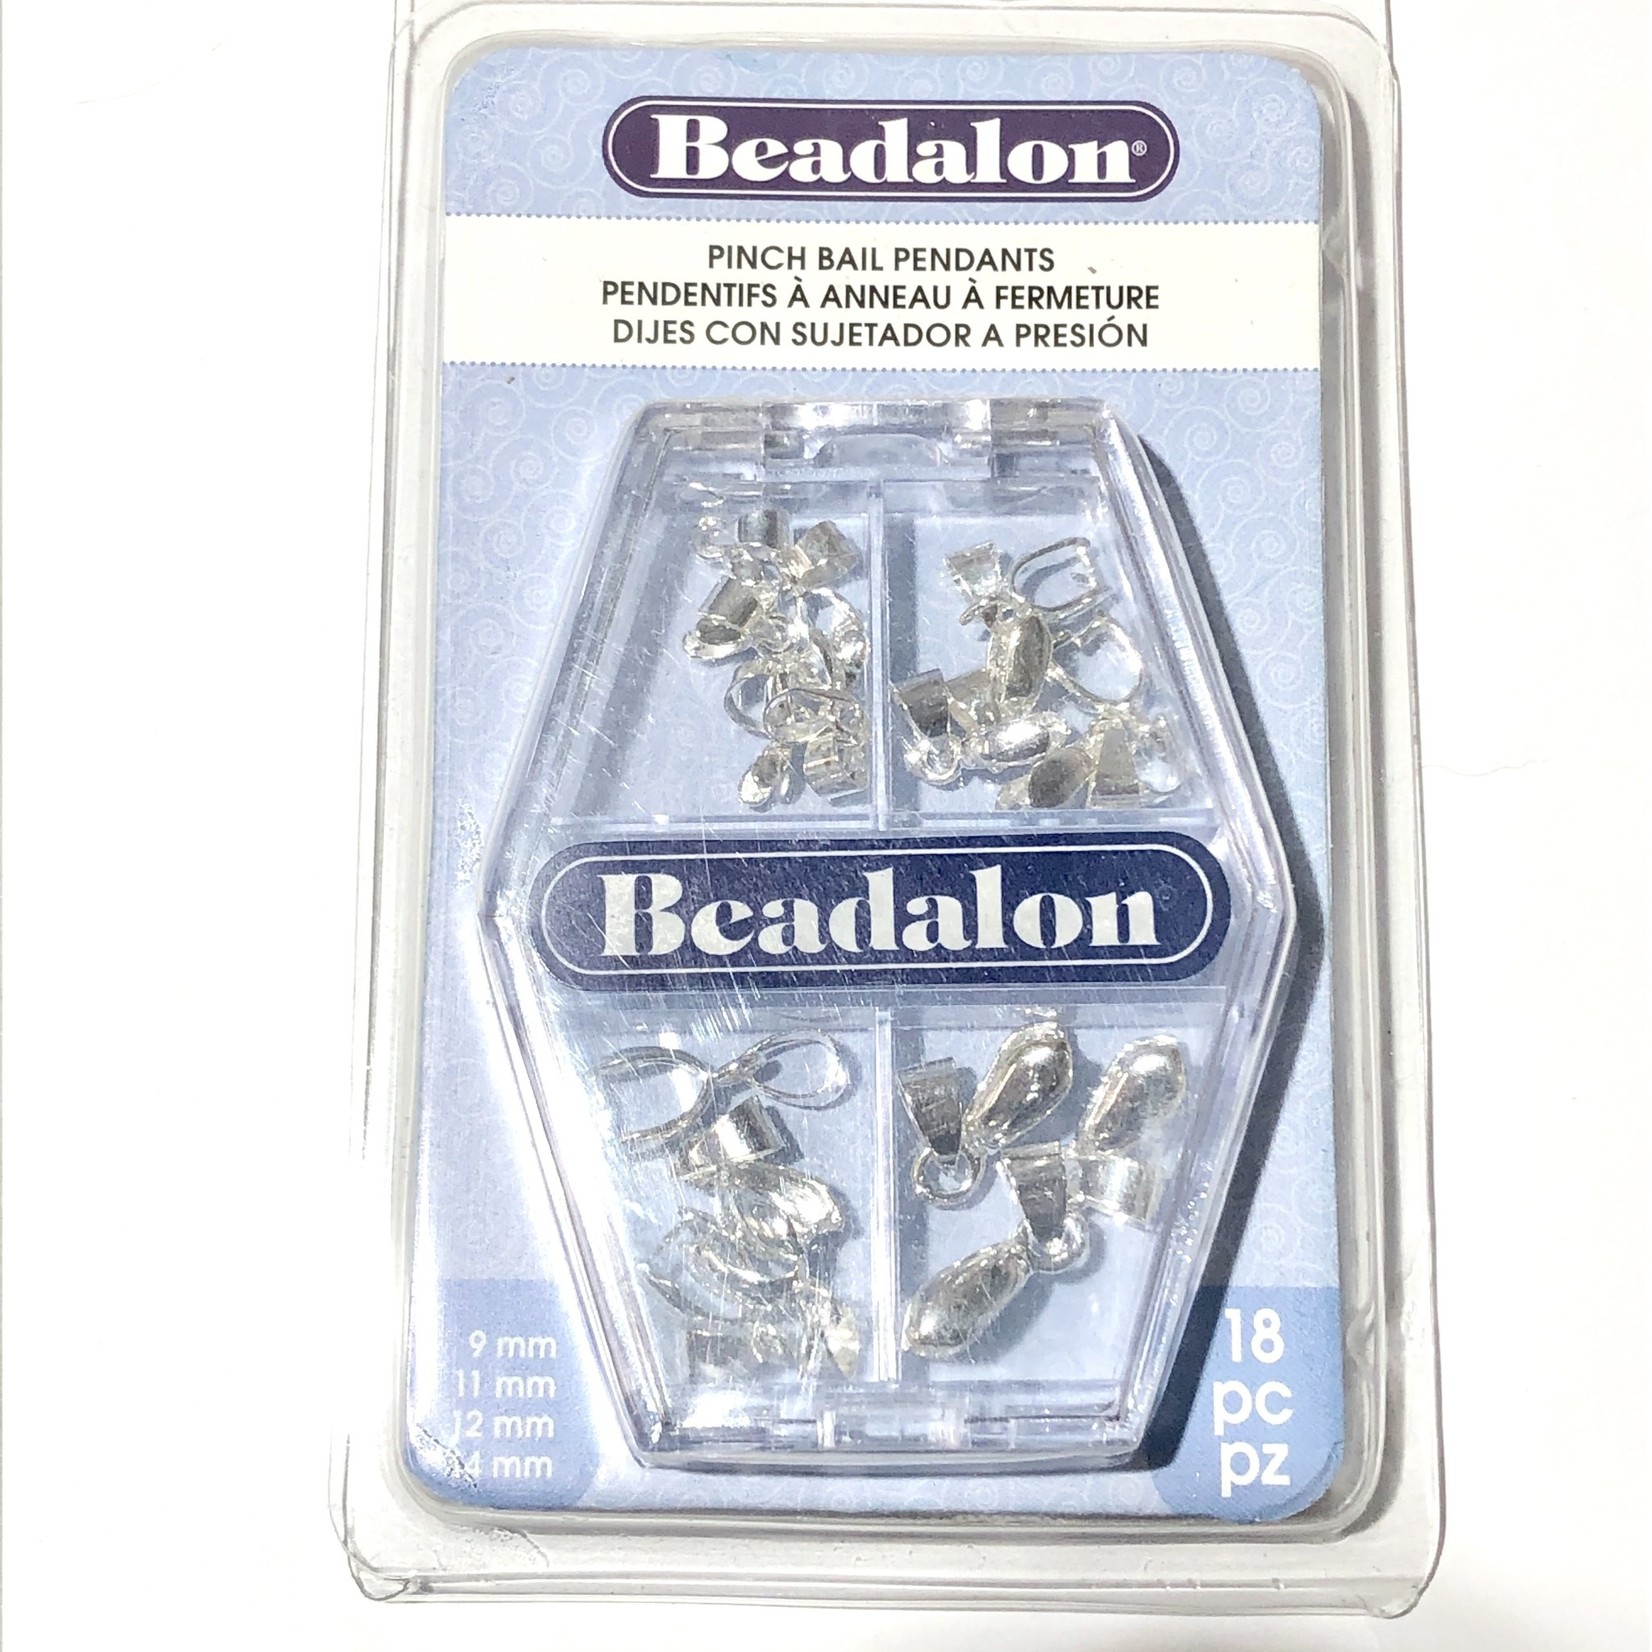 Beadalon Silver Plated Pinch Bail Pendant Variety Pack 18pcs